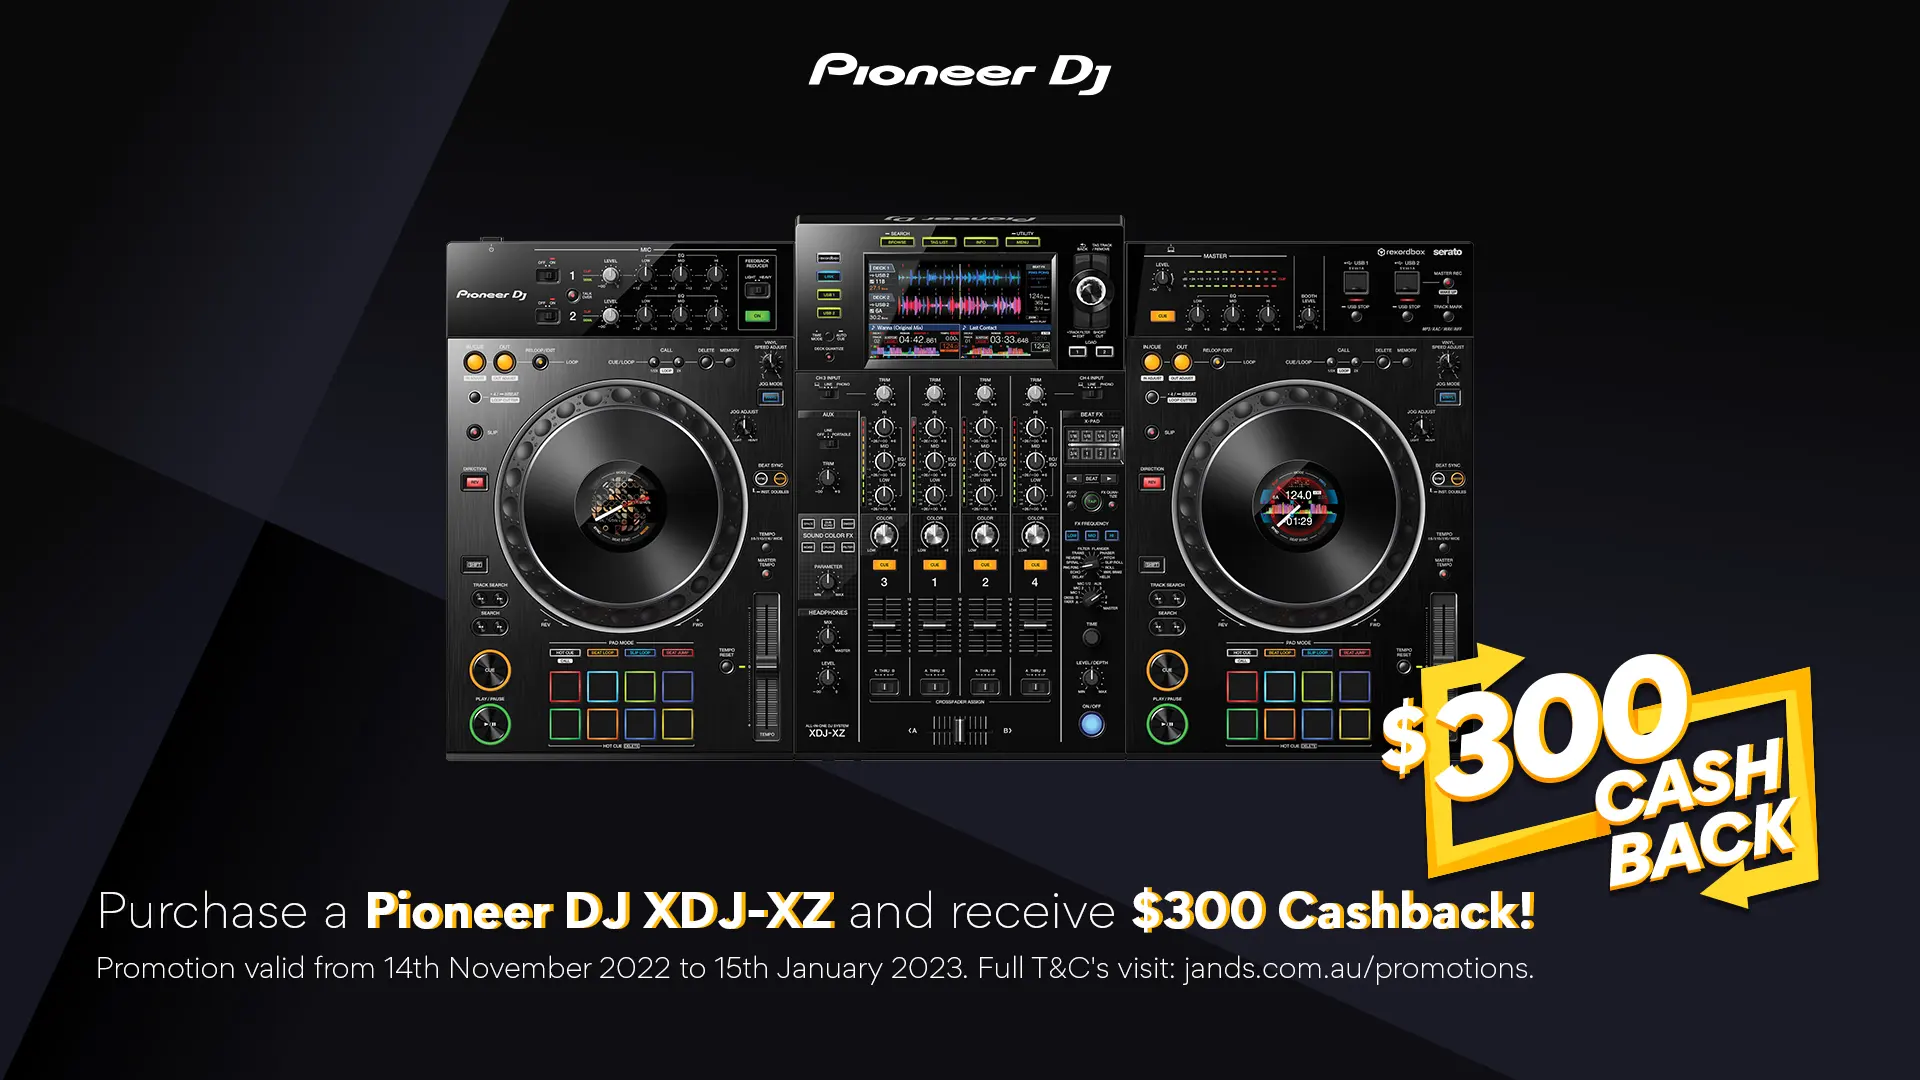 Find All Current offers from DJ City: $300 Cashback on DJ XDJ-XZ, $100 cashback on Pioneer PLX-1000